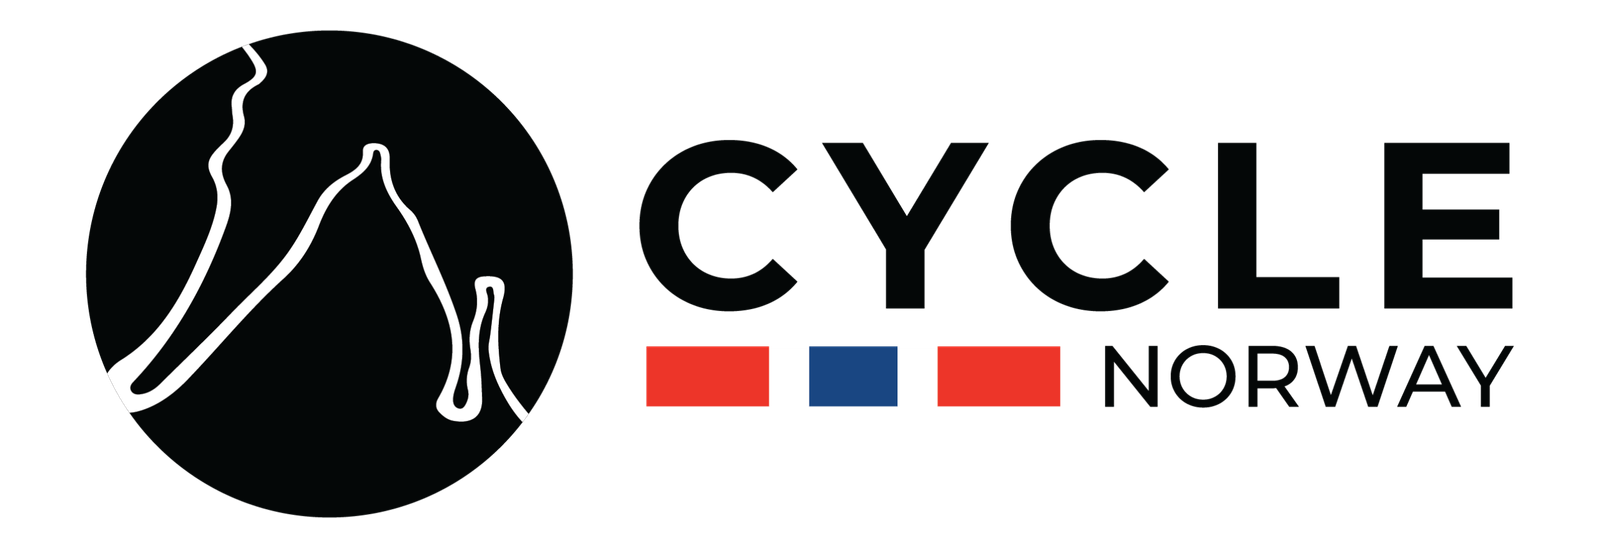 Cycle-Norway-Full-Logo